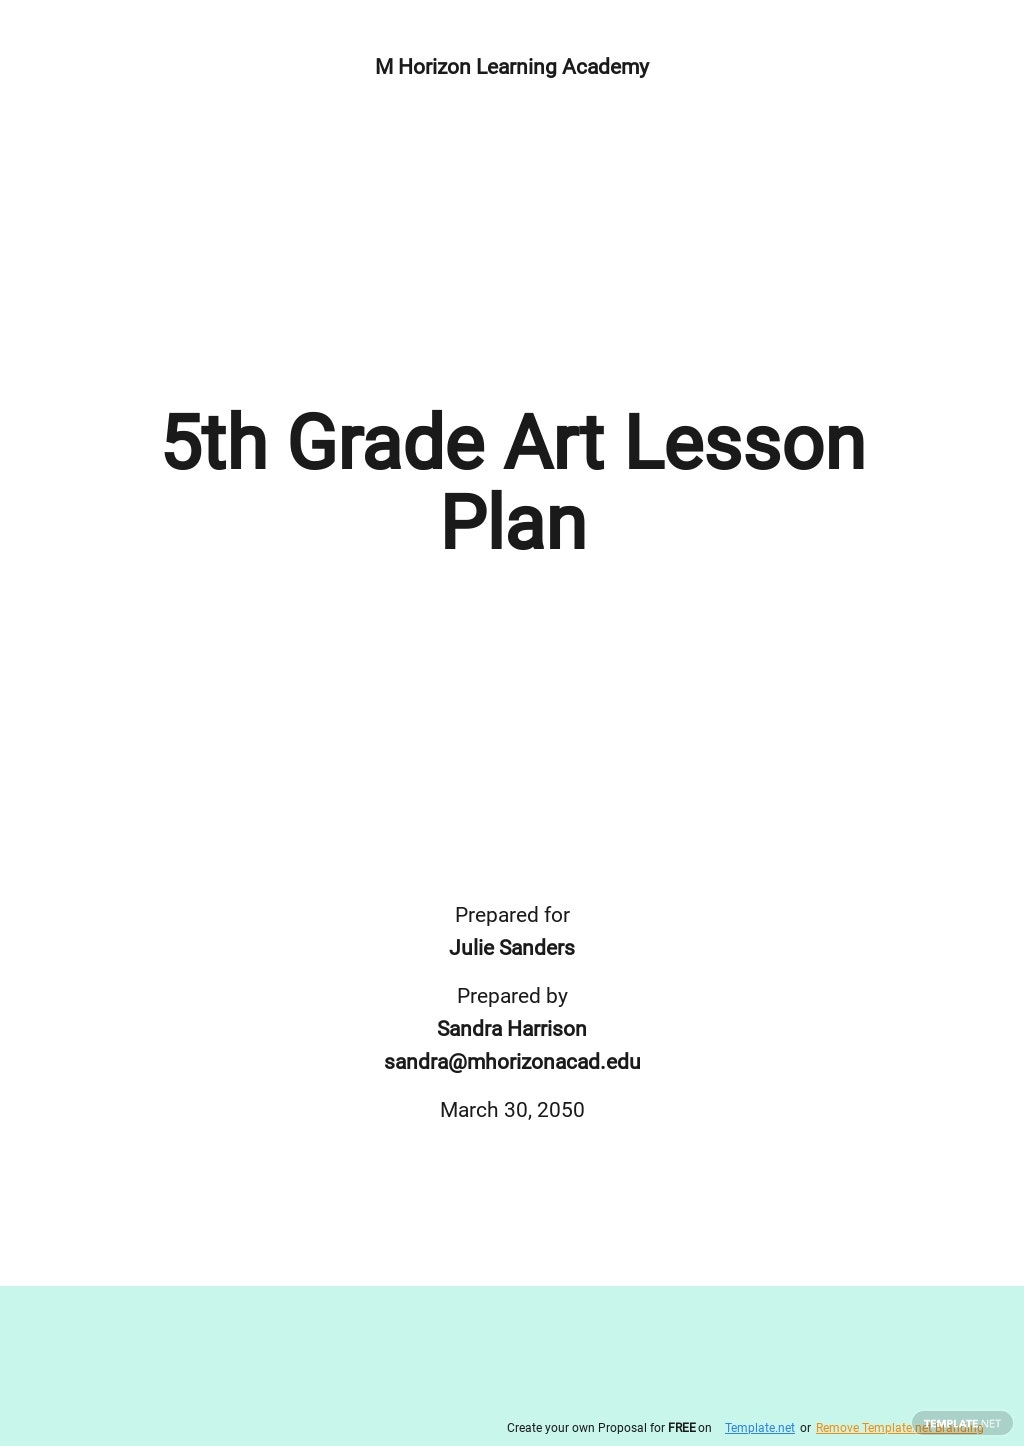 th grade art lesson plan template